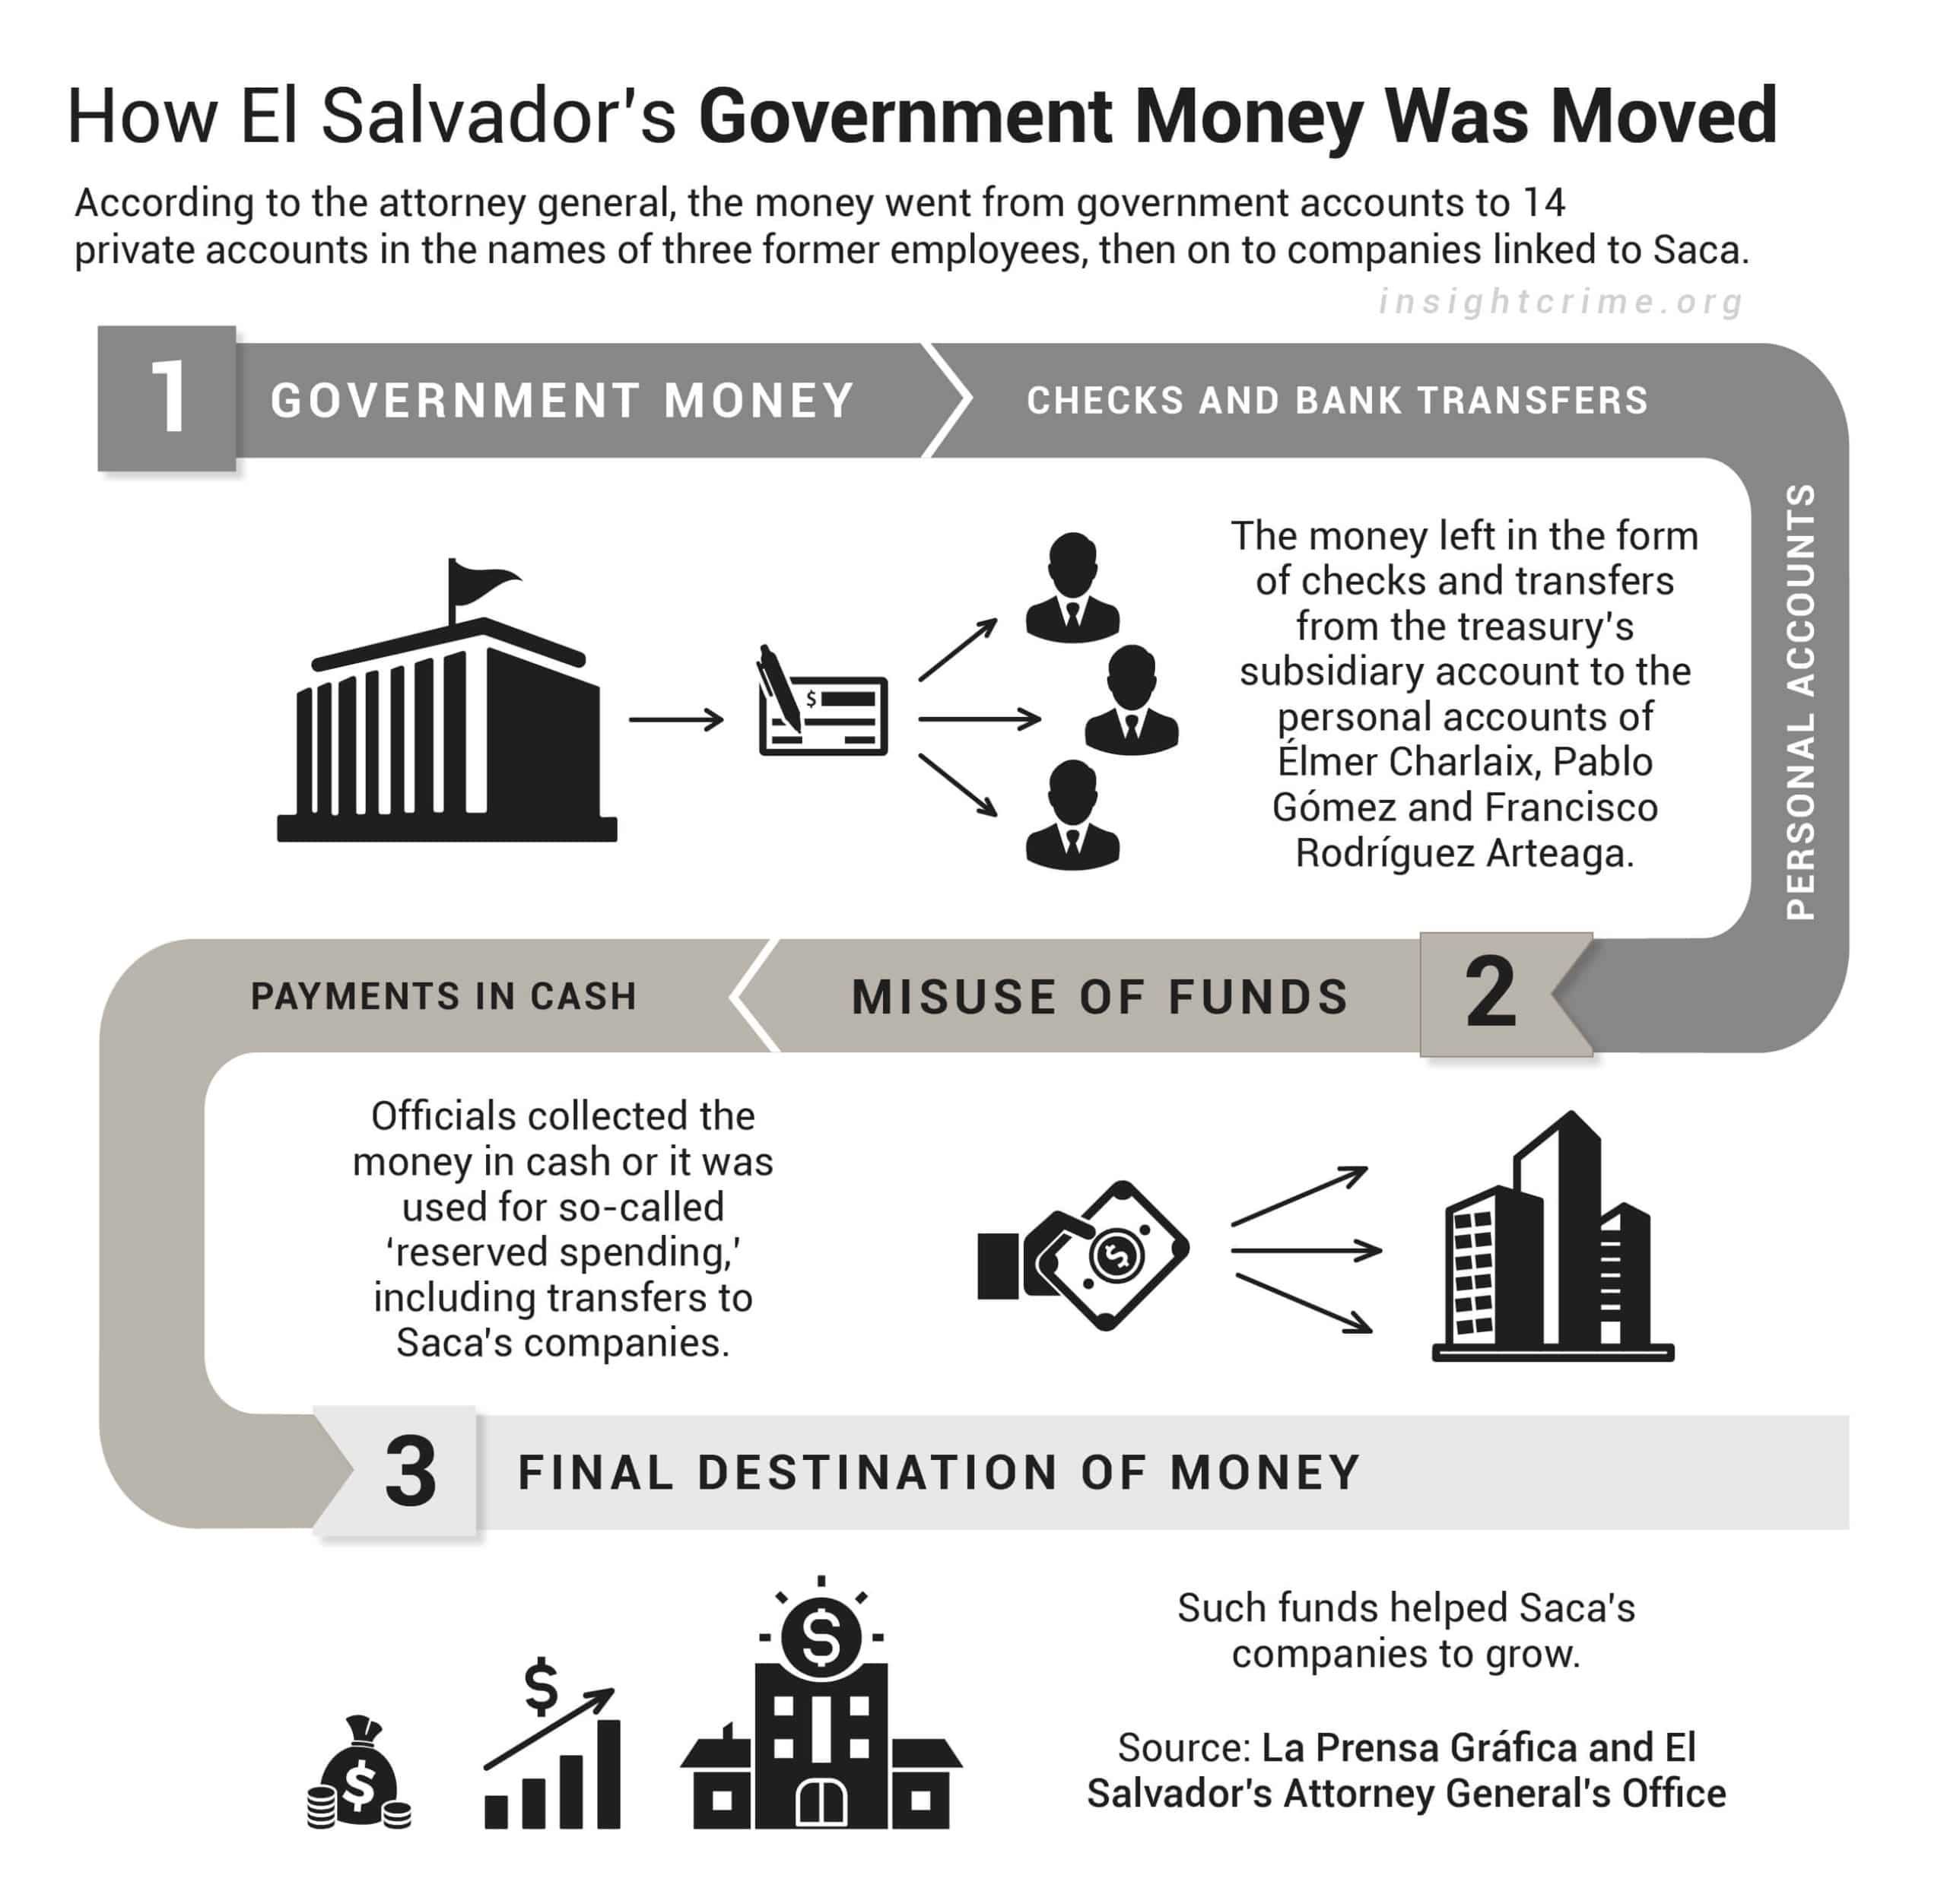 How El Salvador's former president Antonio Saca pilfered $300 million in public funds. 